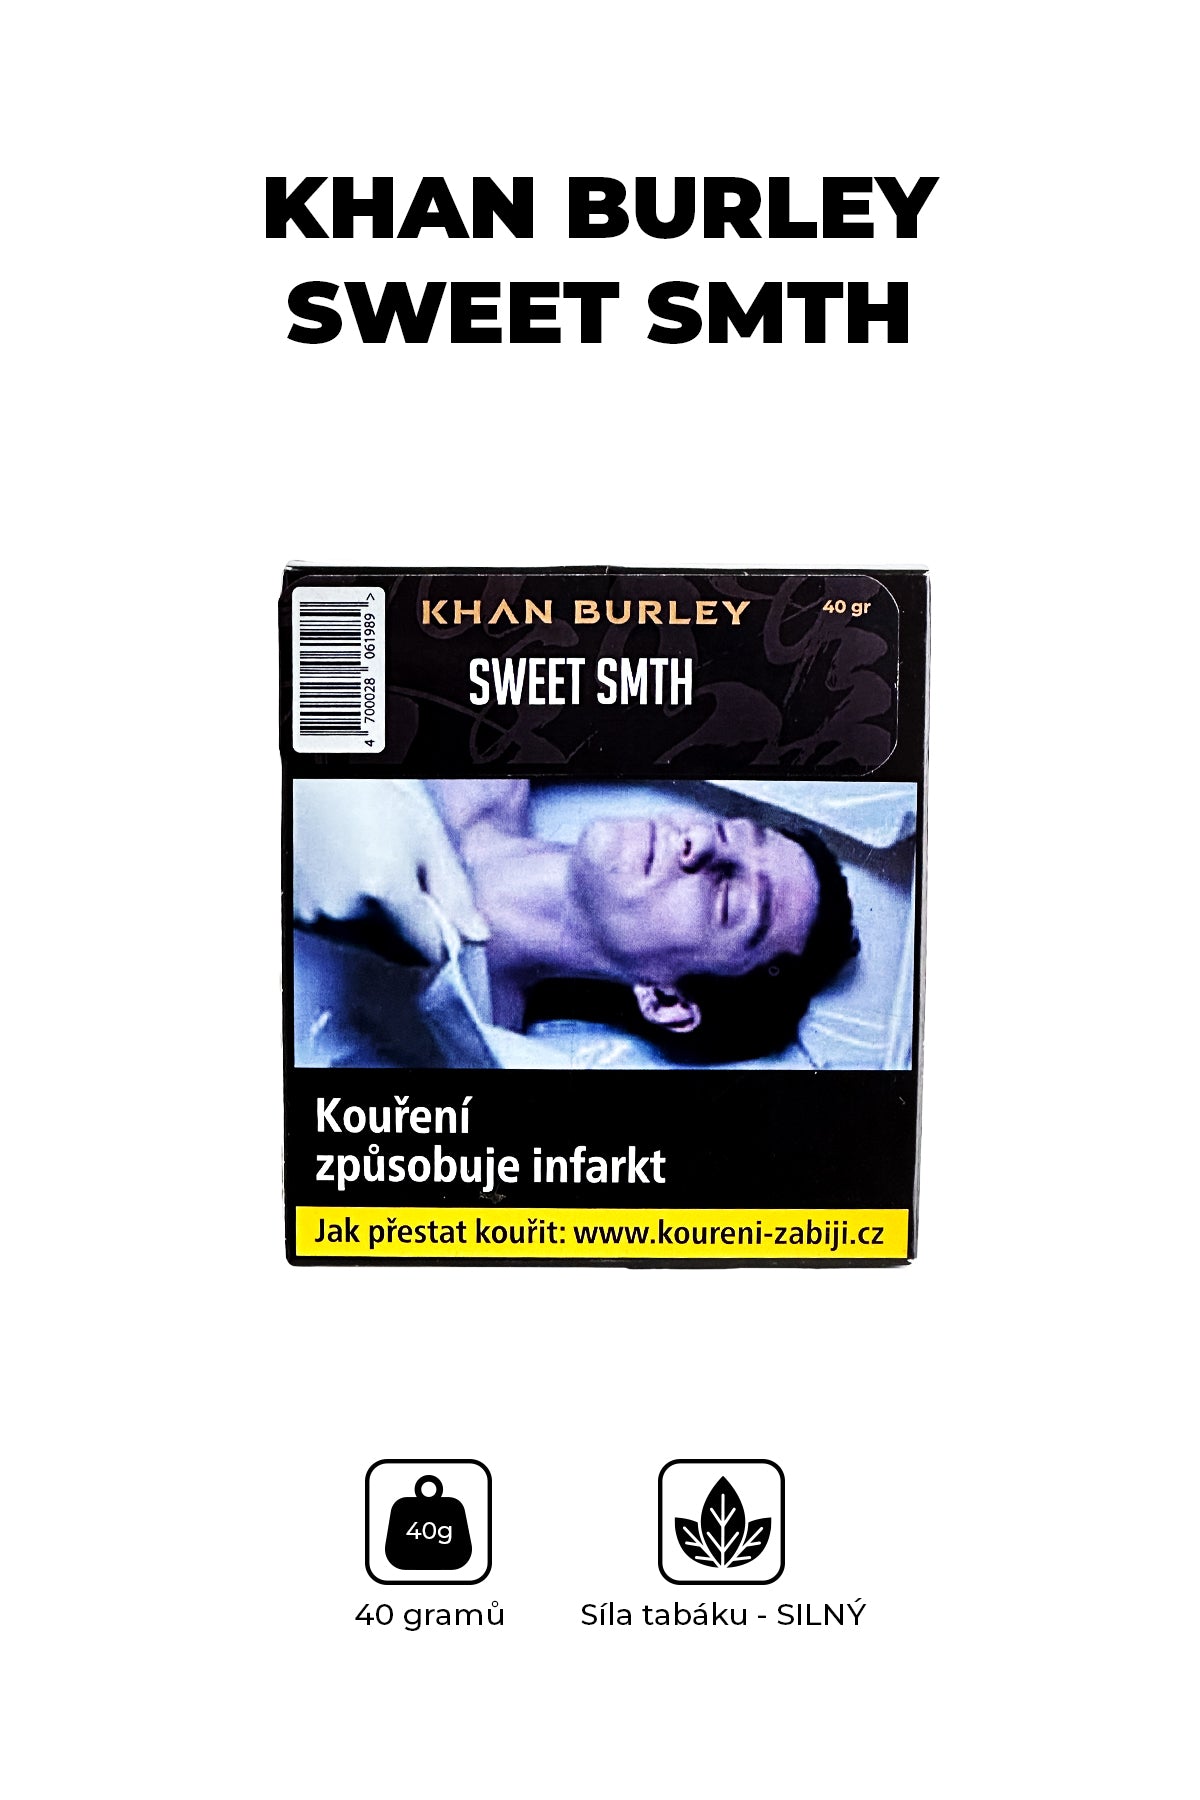 Tabák - Khan Burley 40g - Sweet Smth